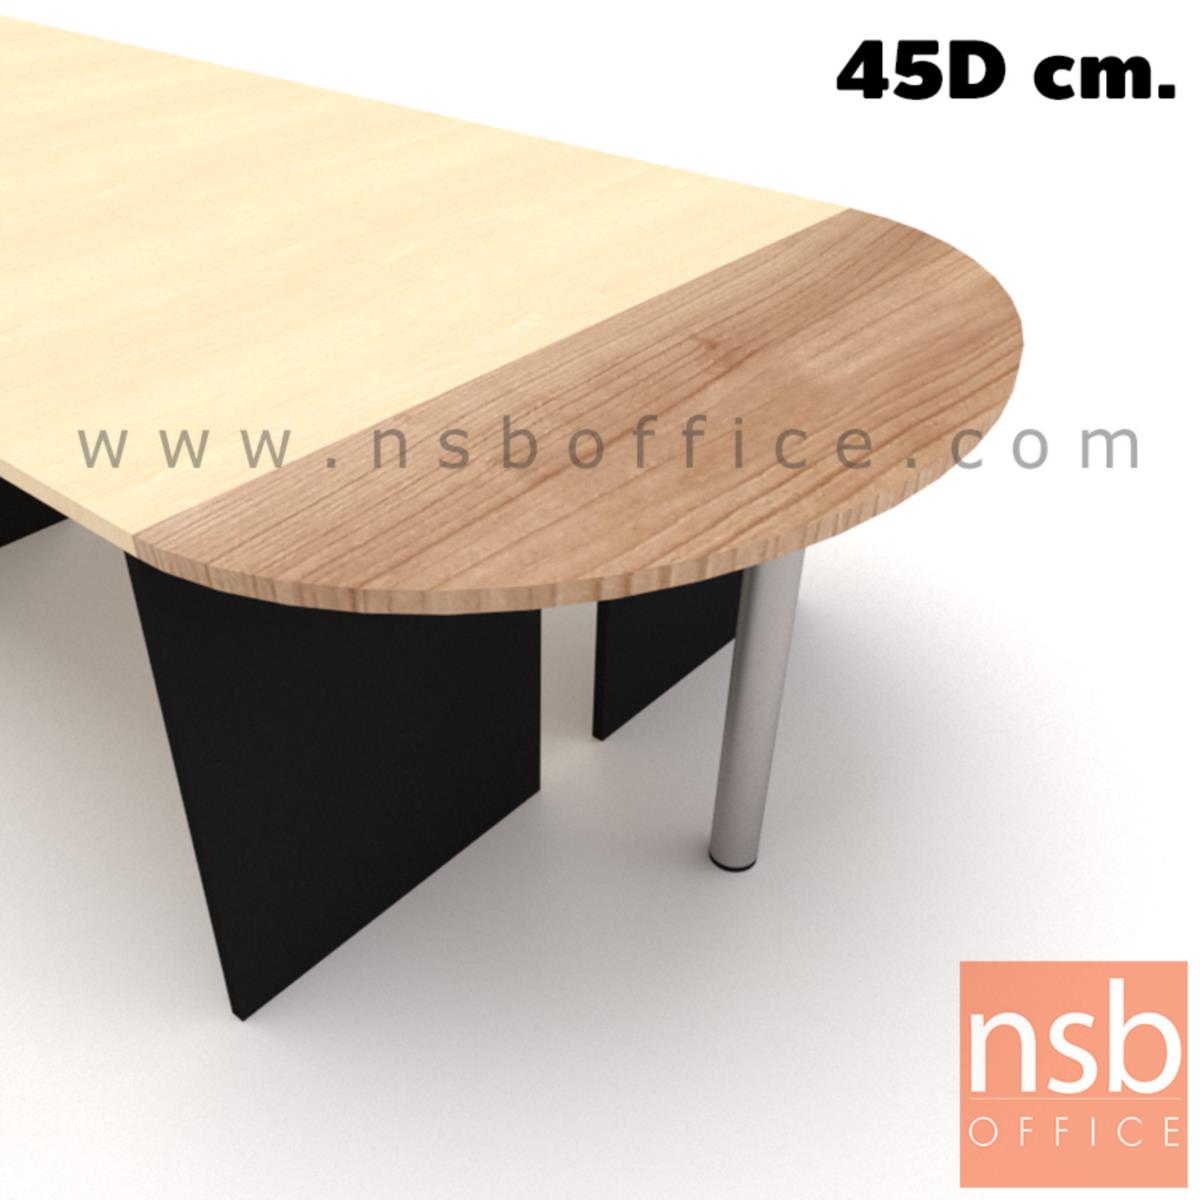 A04A060:โต๊ะเข้ามุมหัวโค้งแต่ไม่ครึ่งวงกลม รุ่น NSB-2045 ขนาด 120W ,150W ,160W cm.  ขากลมโครเมียม